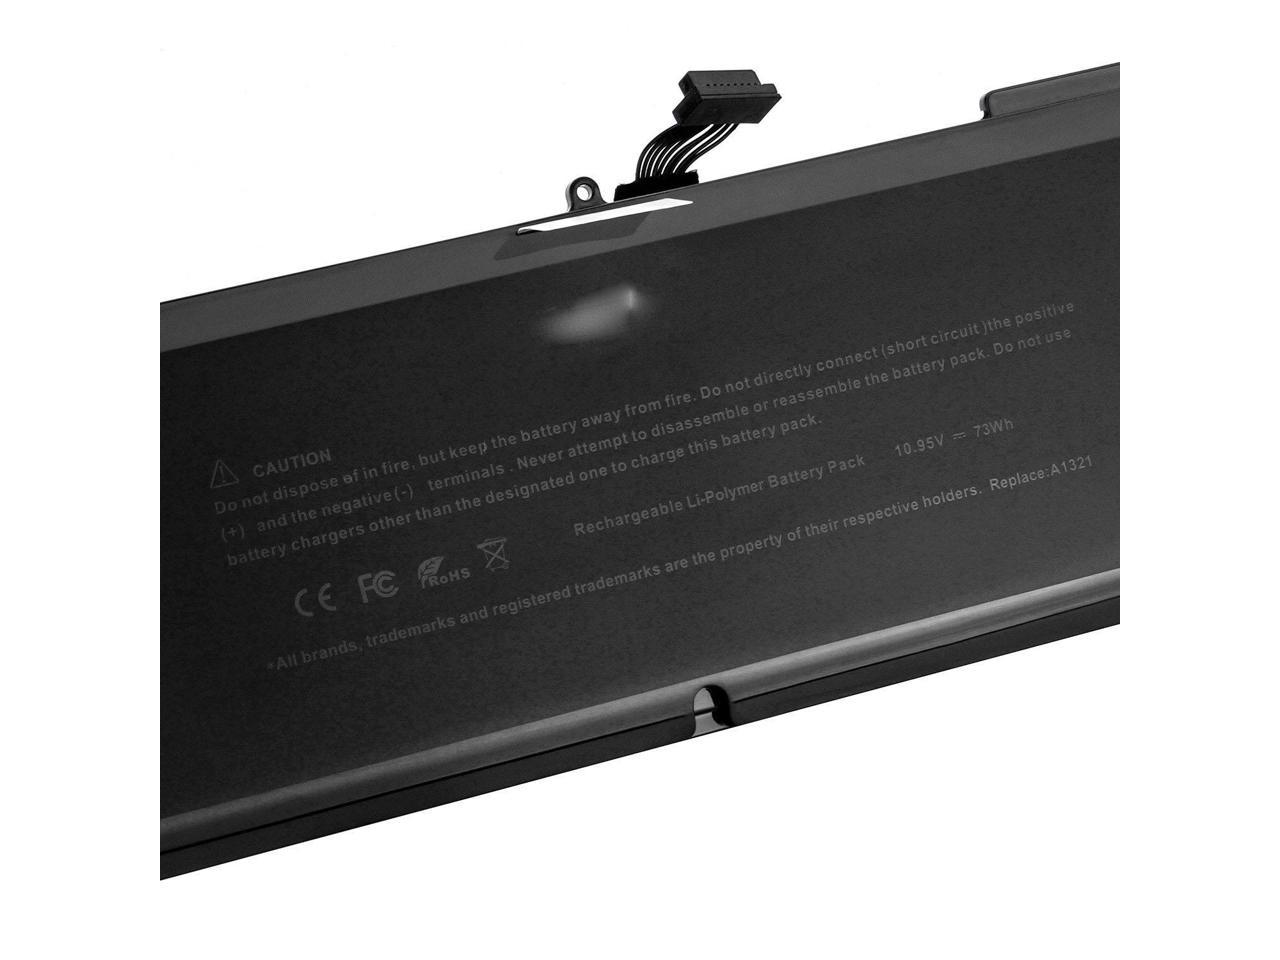 macbook pro 15 inch 2010 battery